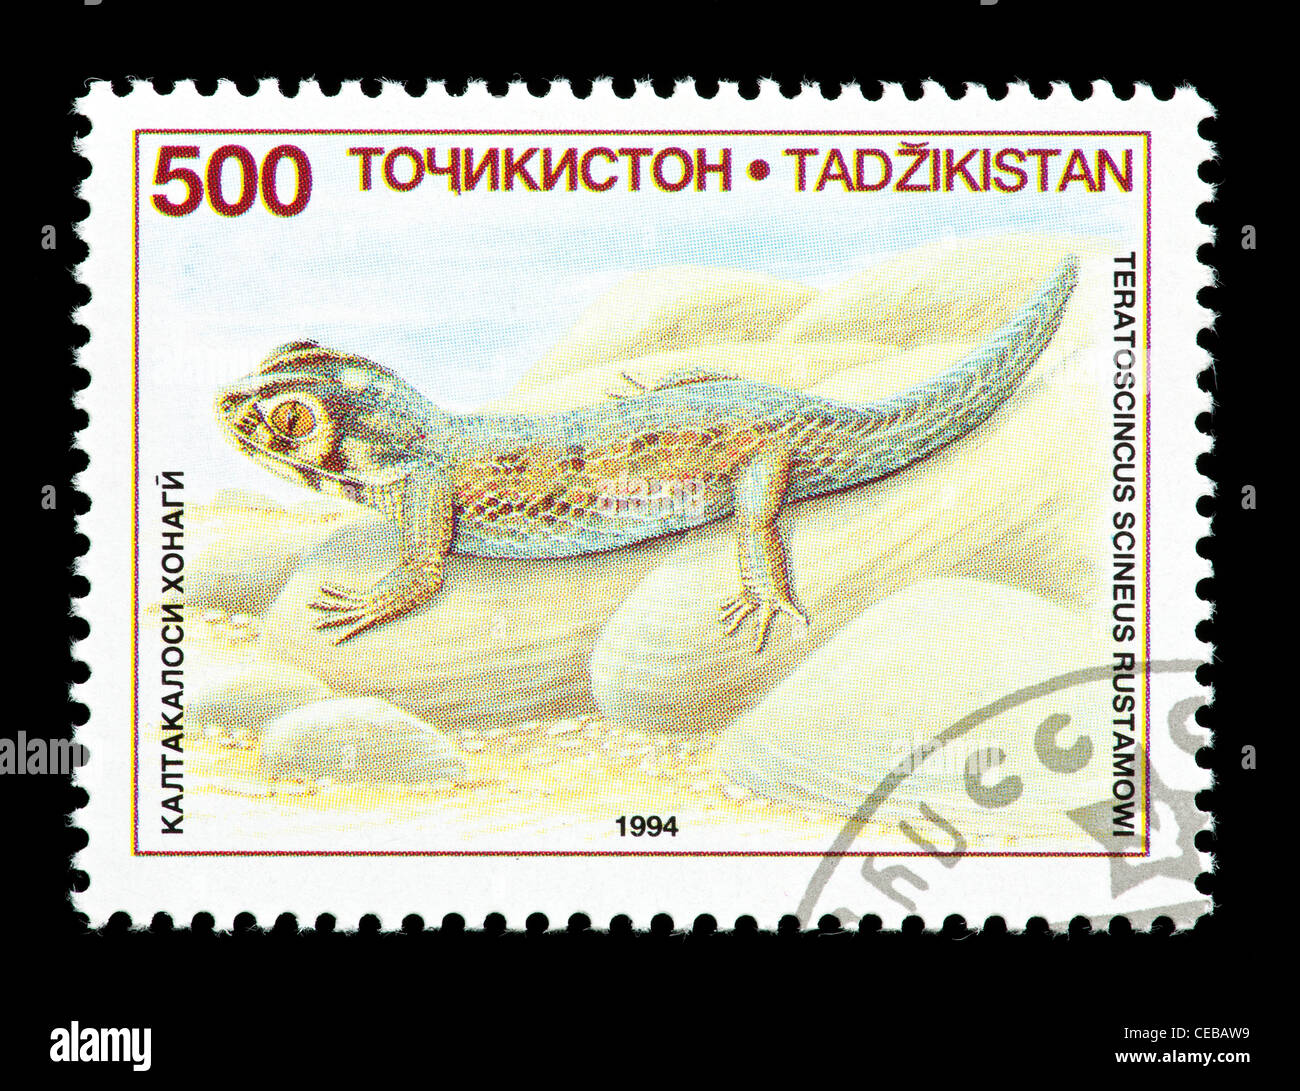 Postage stamp from Tajikistan depicting a small lizard (Teratoscincus scineus) Stock Photo